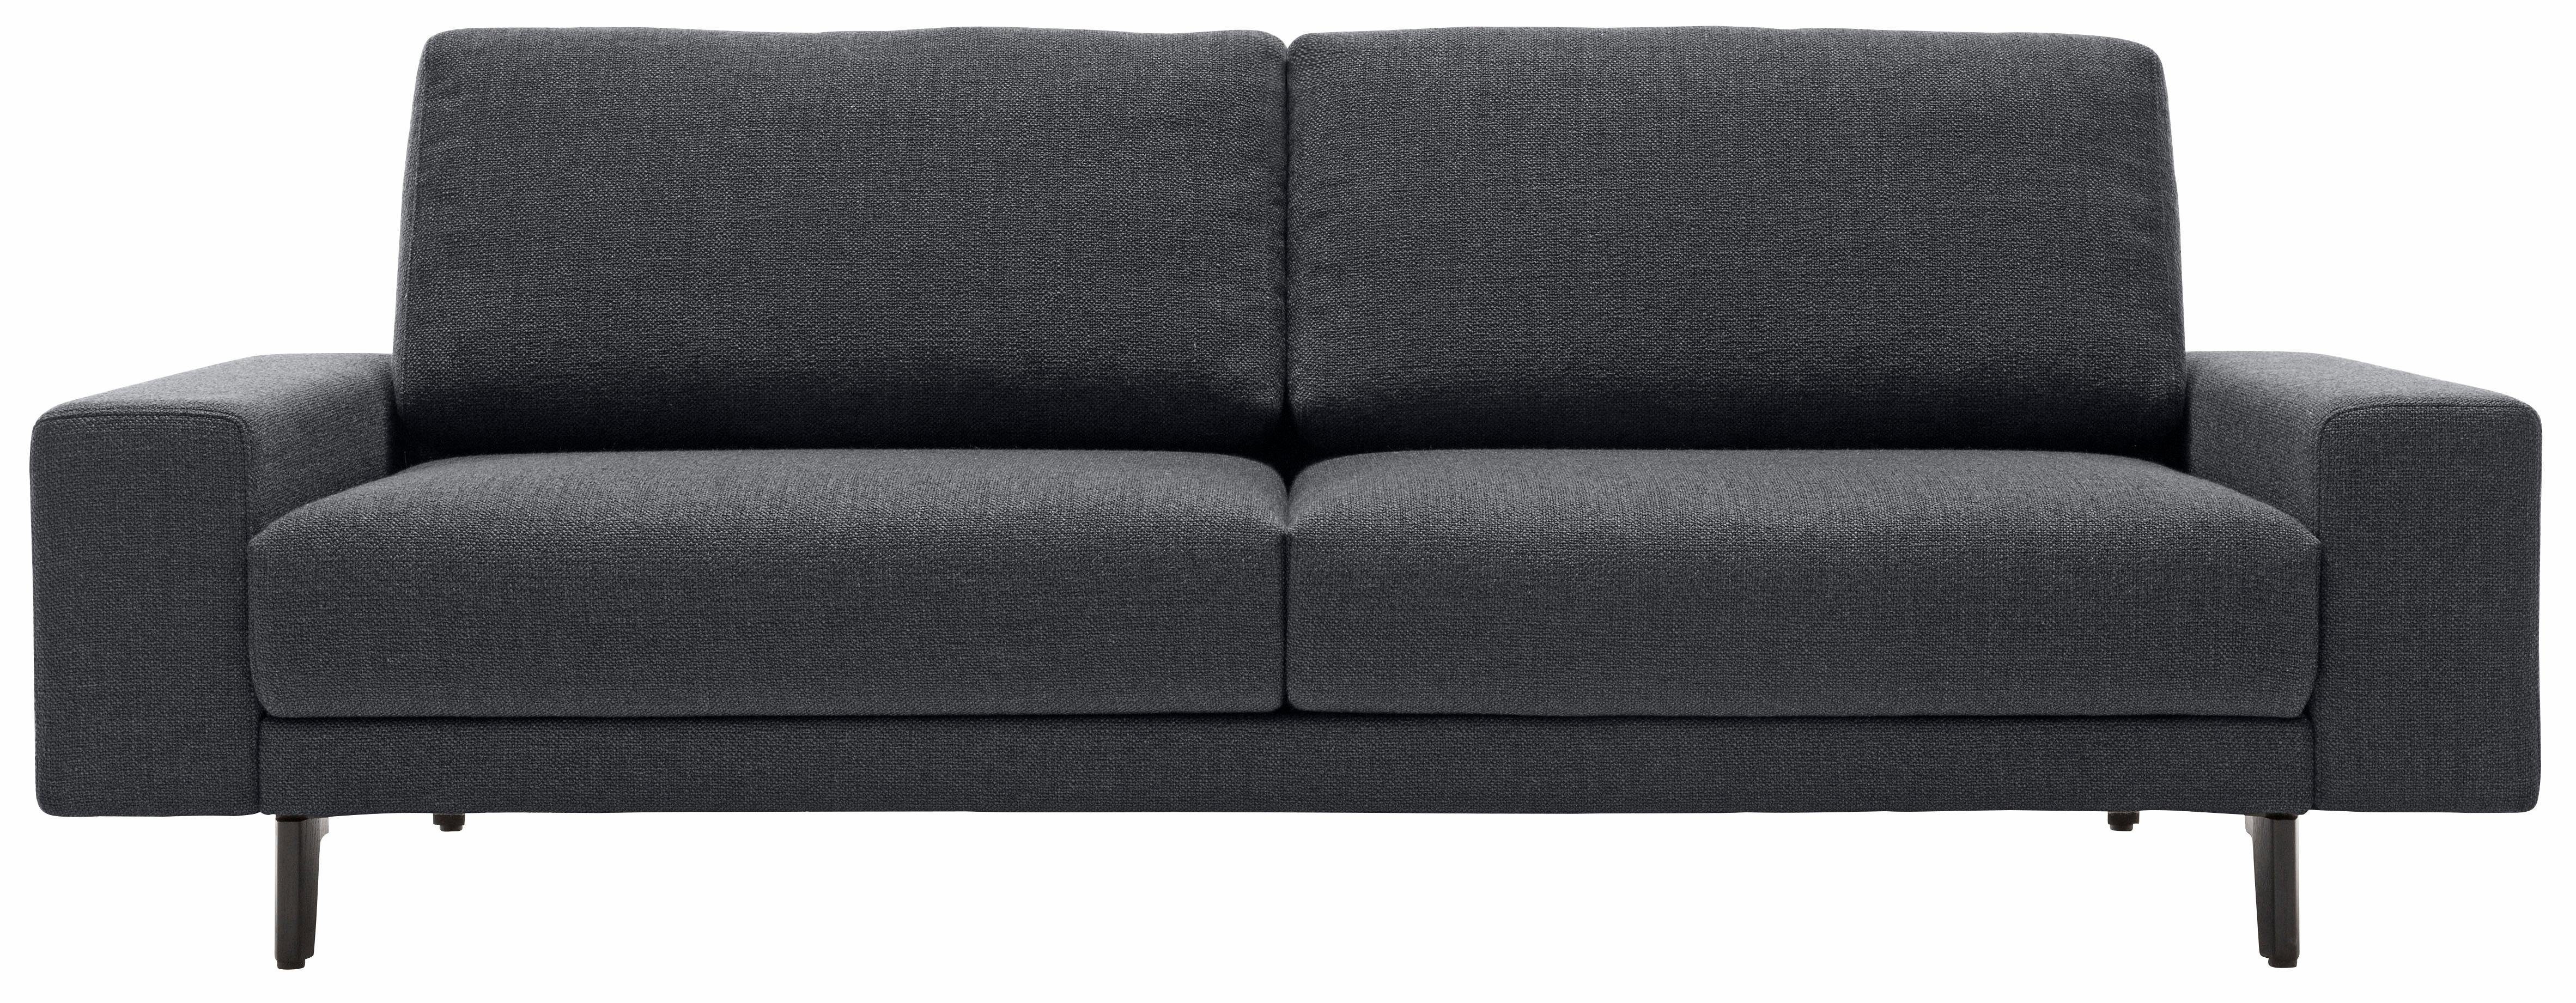 hülsta cm Alugussfüße Breite umbragrau, Armlehne niedrig, 2-Sitzer 180 in hs.450, breit sofa